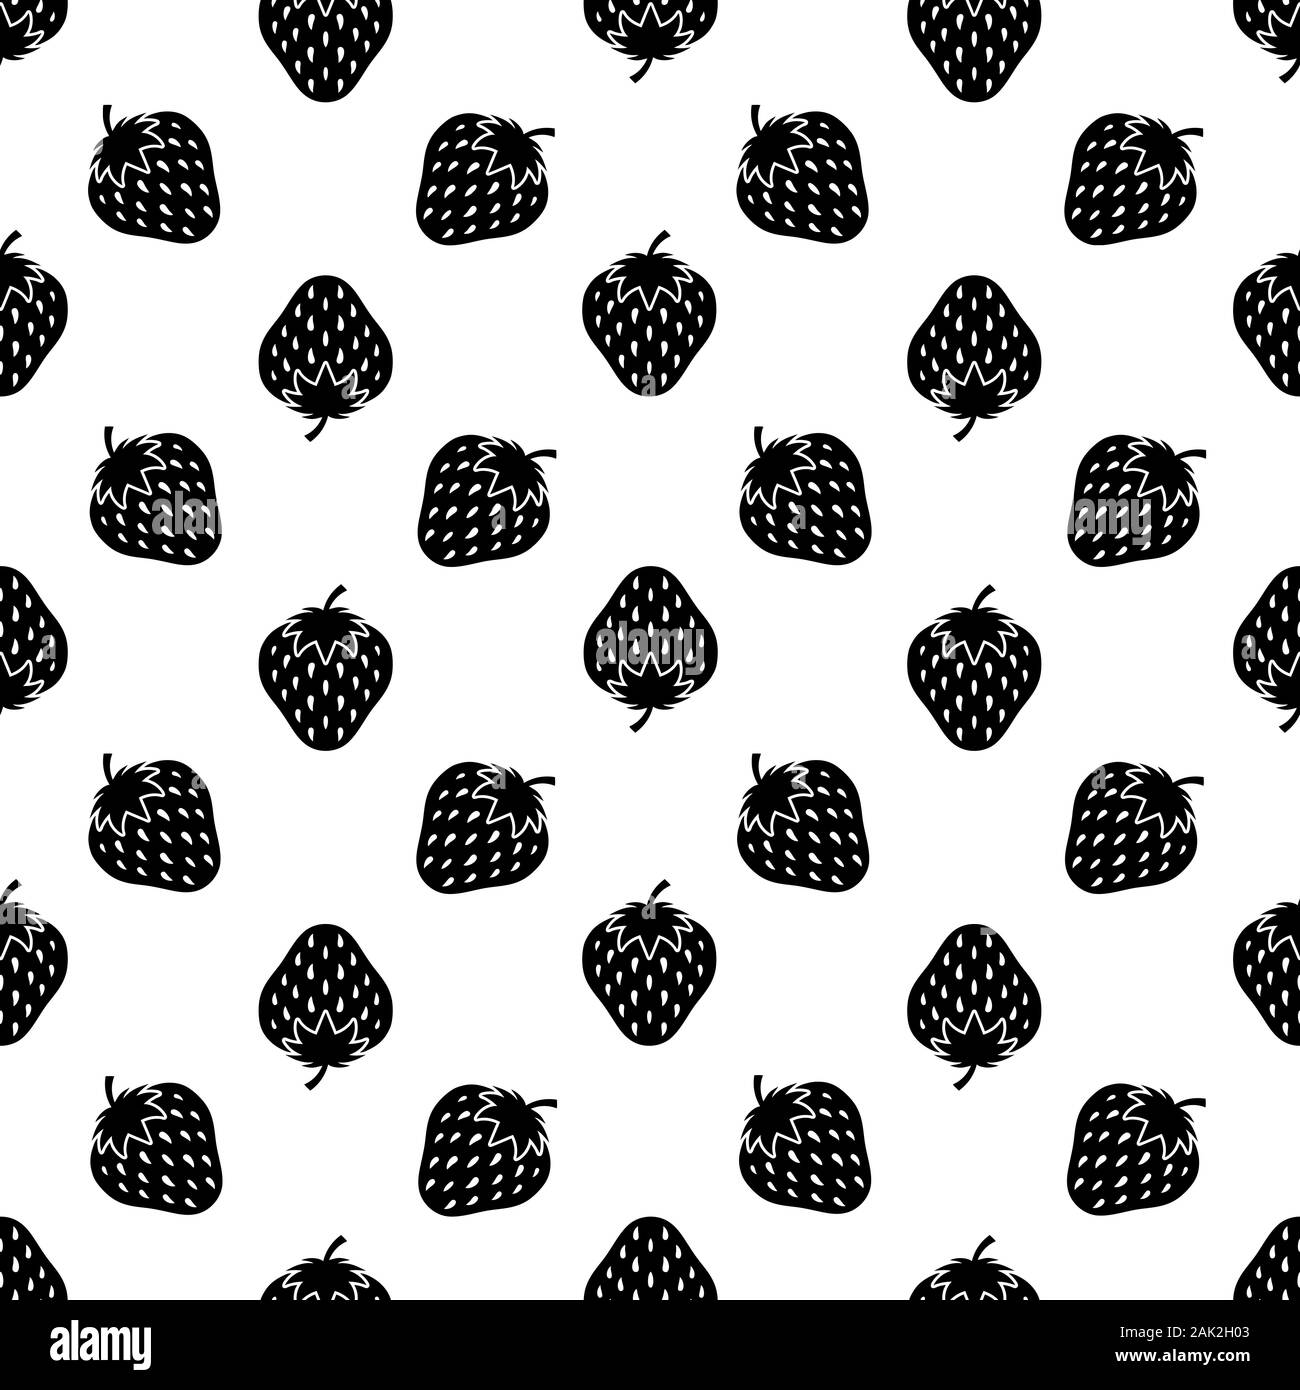 Strawberries seamless repeat pattern background Stock Photo